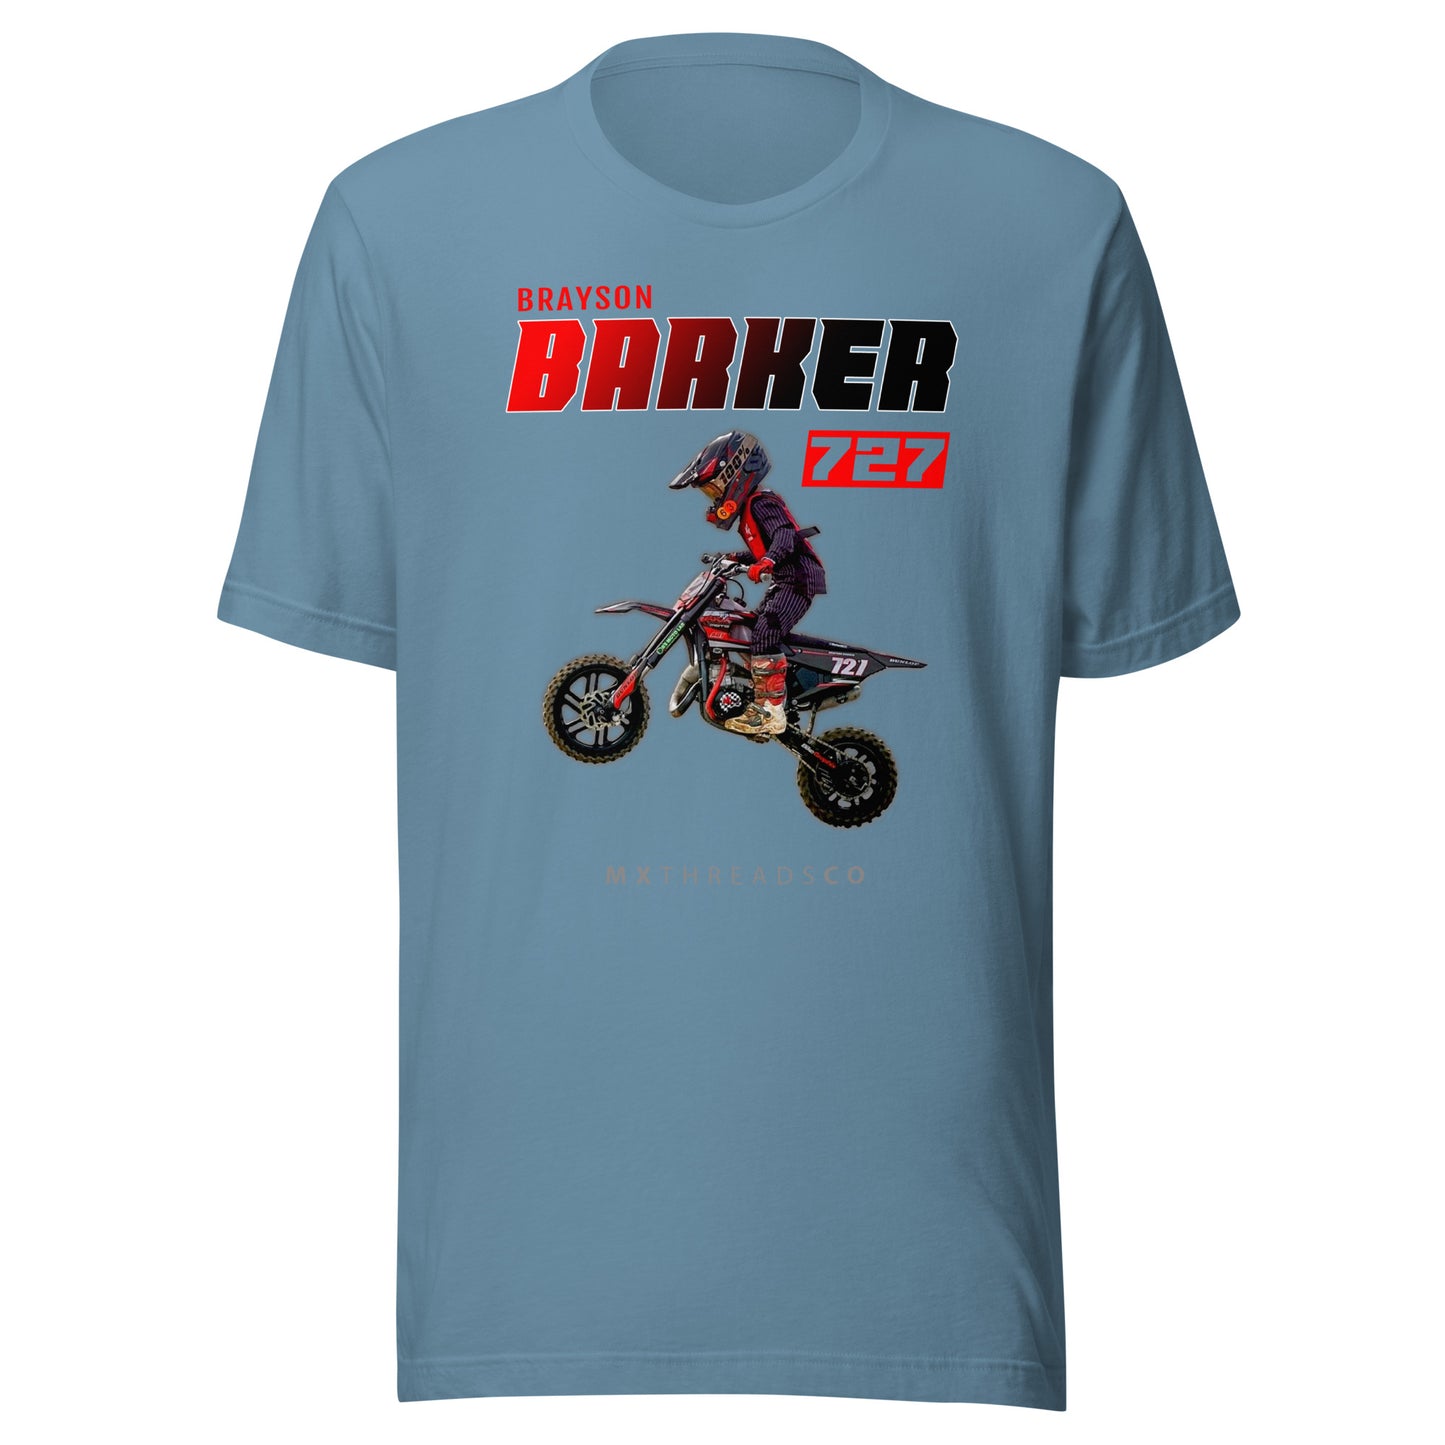 Brayson Barker Photo-Graphic Series T-Shirt